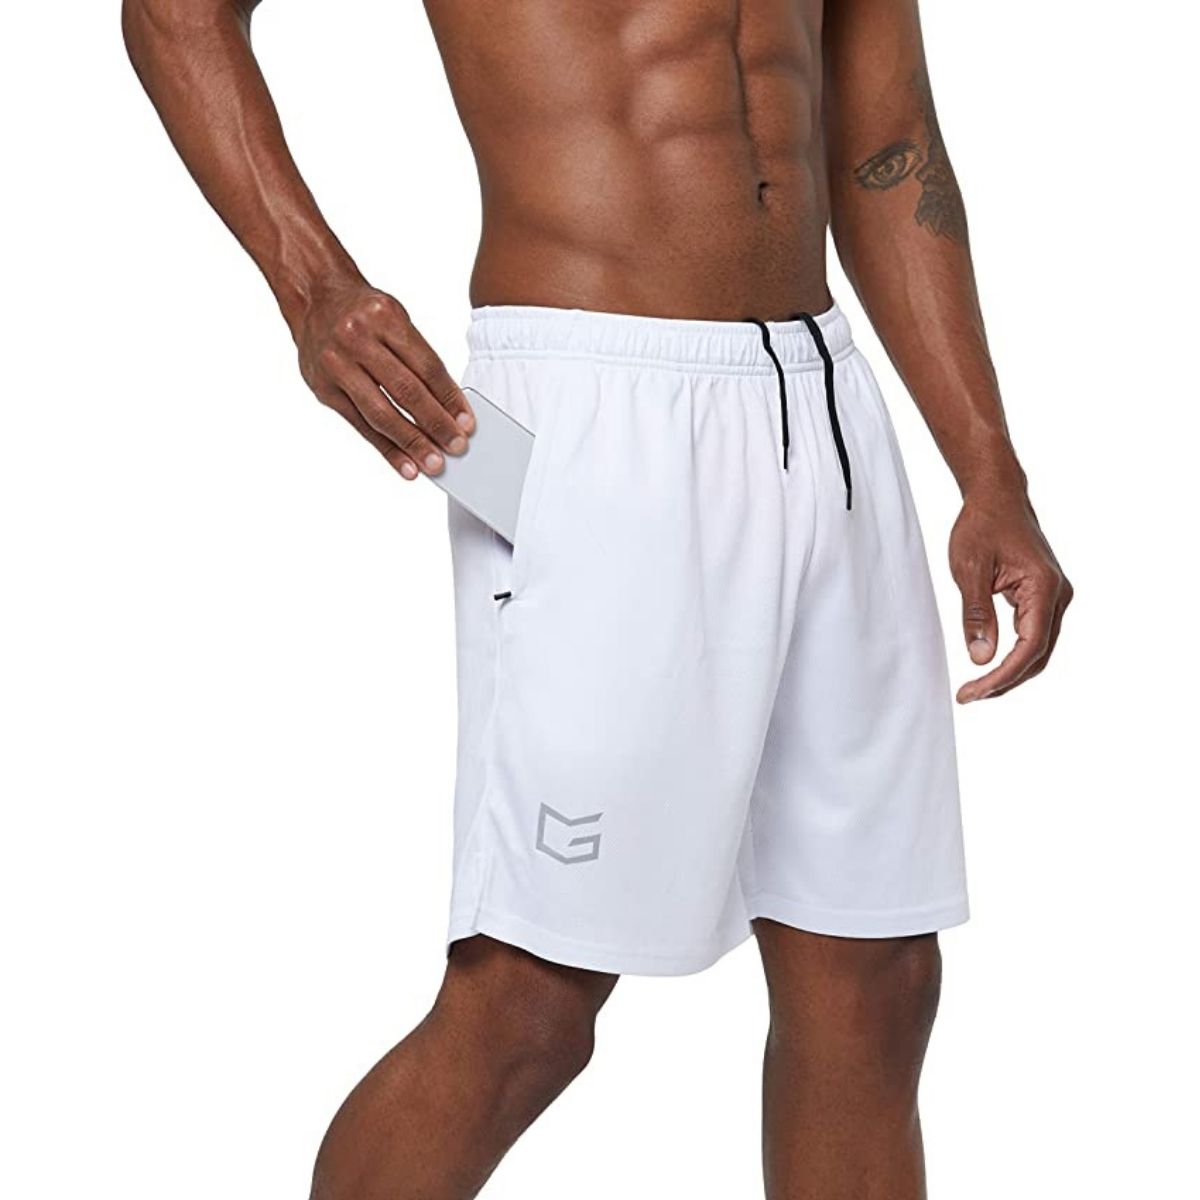 The Best Tennis Shorts Options: G Gradual Men's 7 Inch Shorts